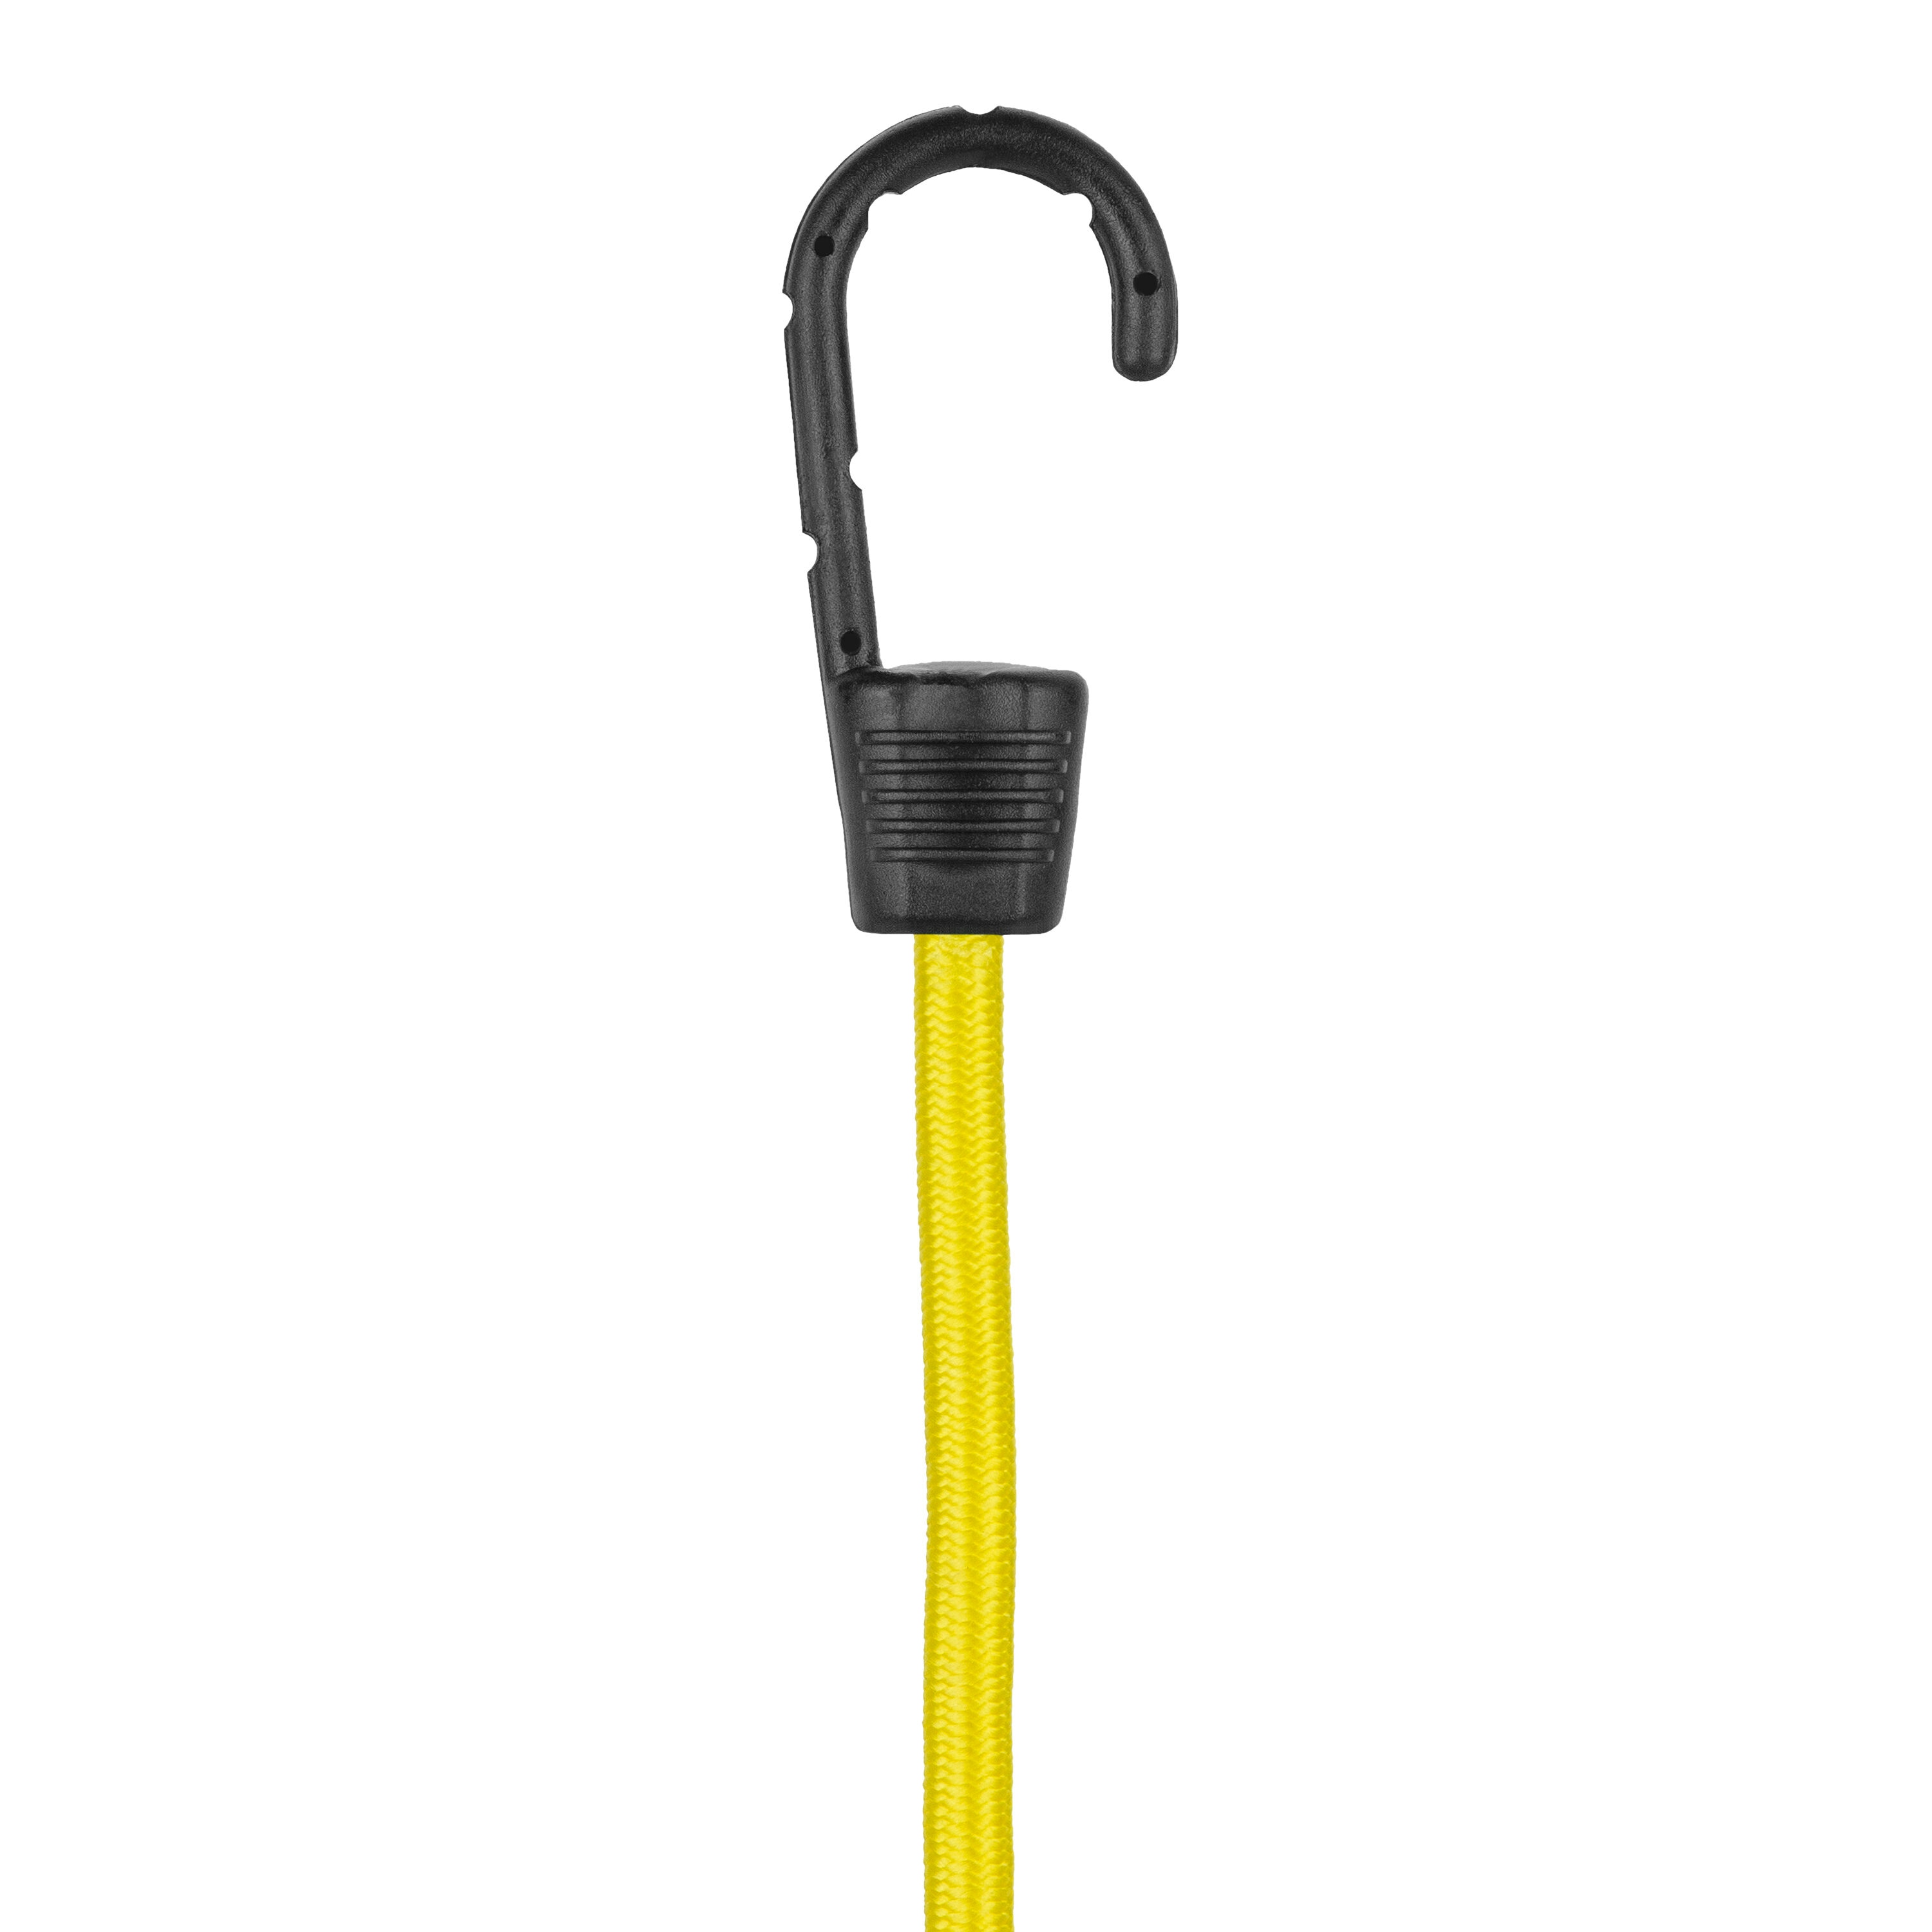 NiteIze KnotBone Adjustable Bungee, 10-48-in, 9-mm cord, Black